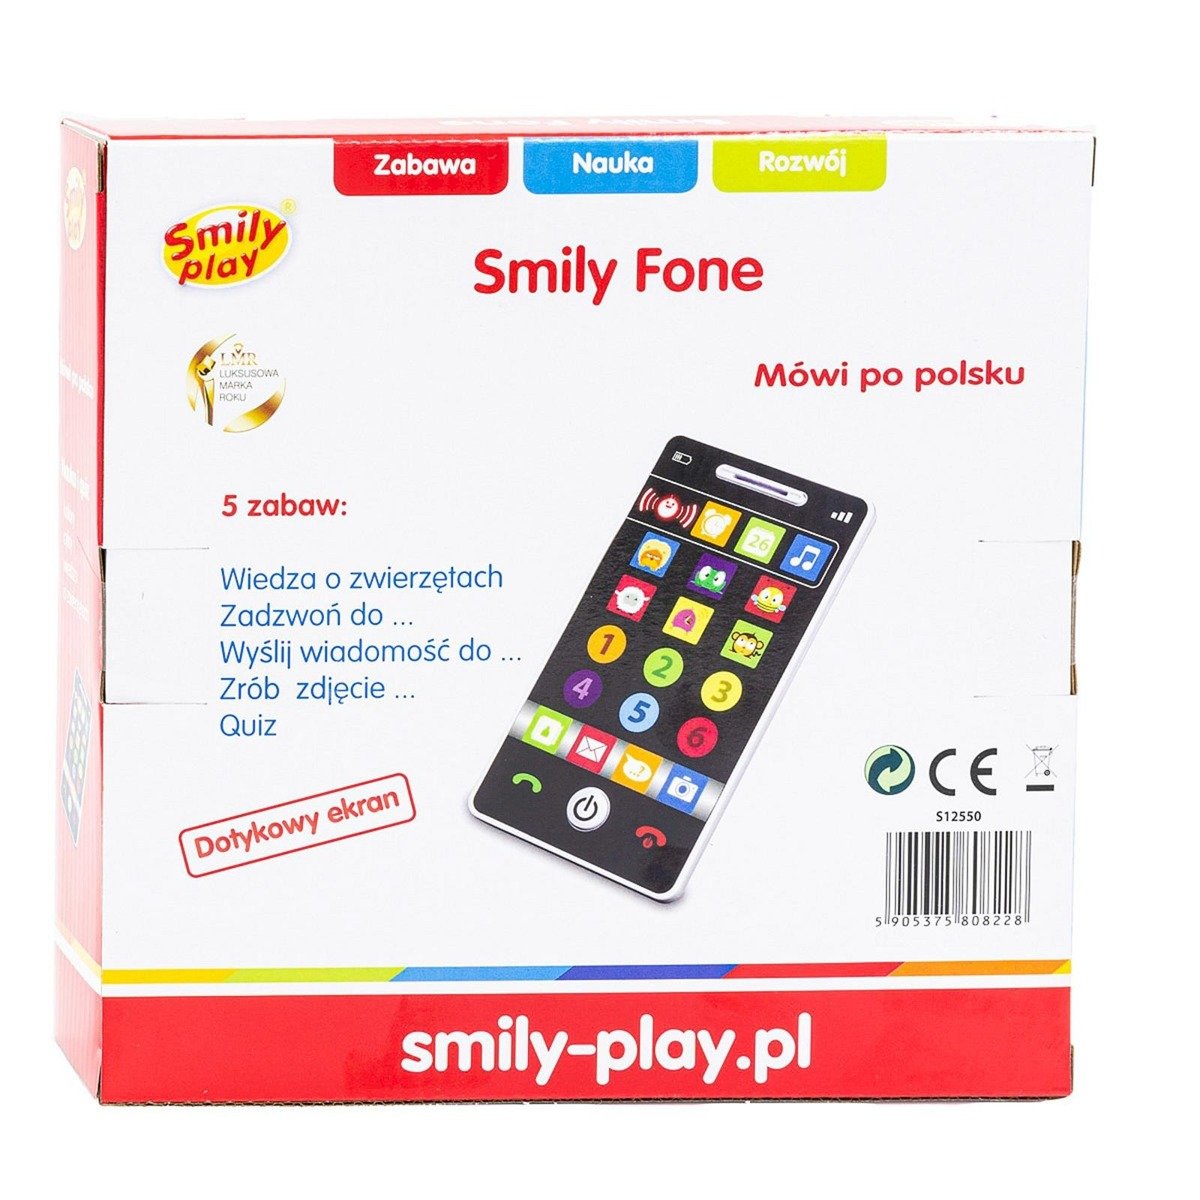 SMILY PLAY Smily Fone dotykowy telefon smartfon